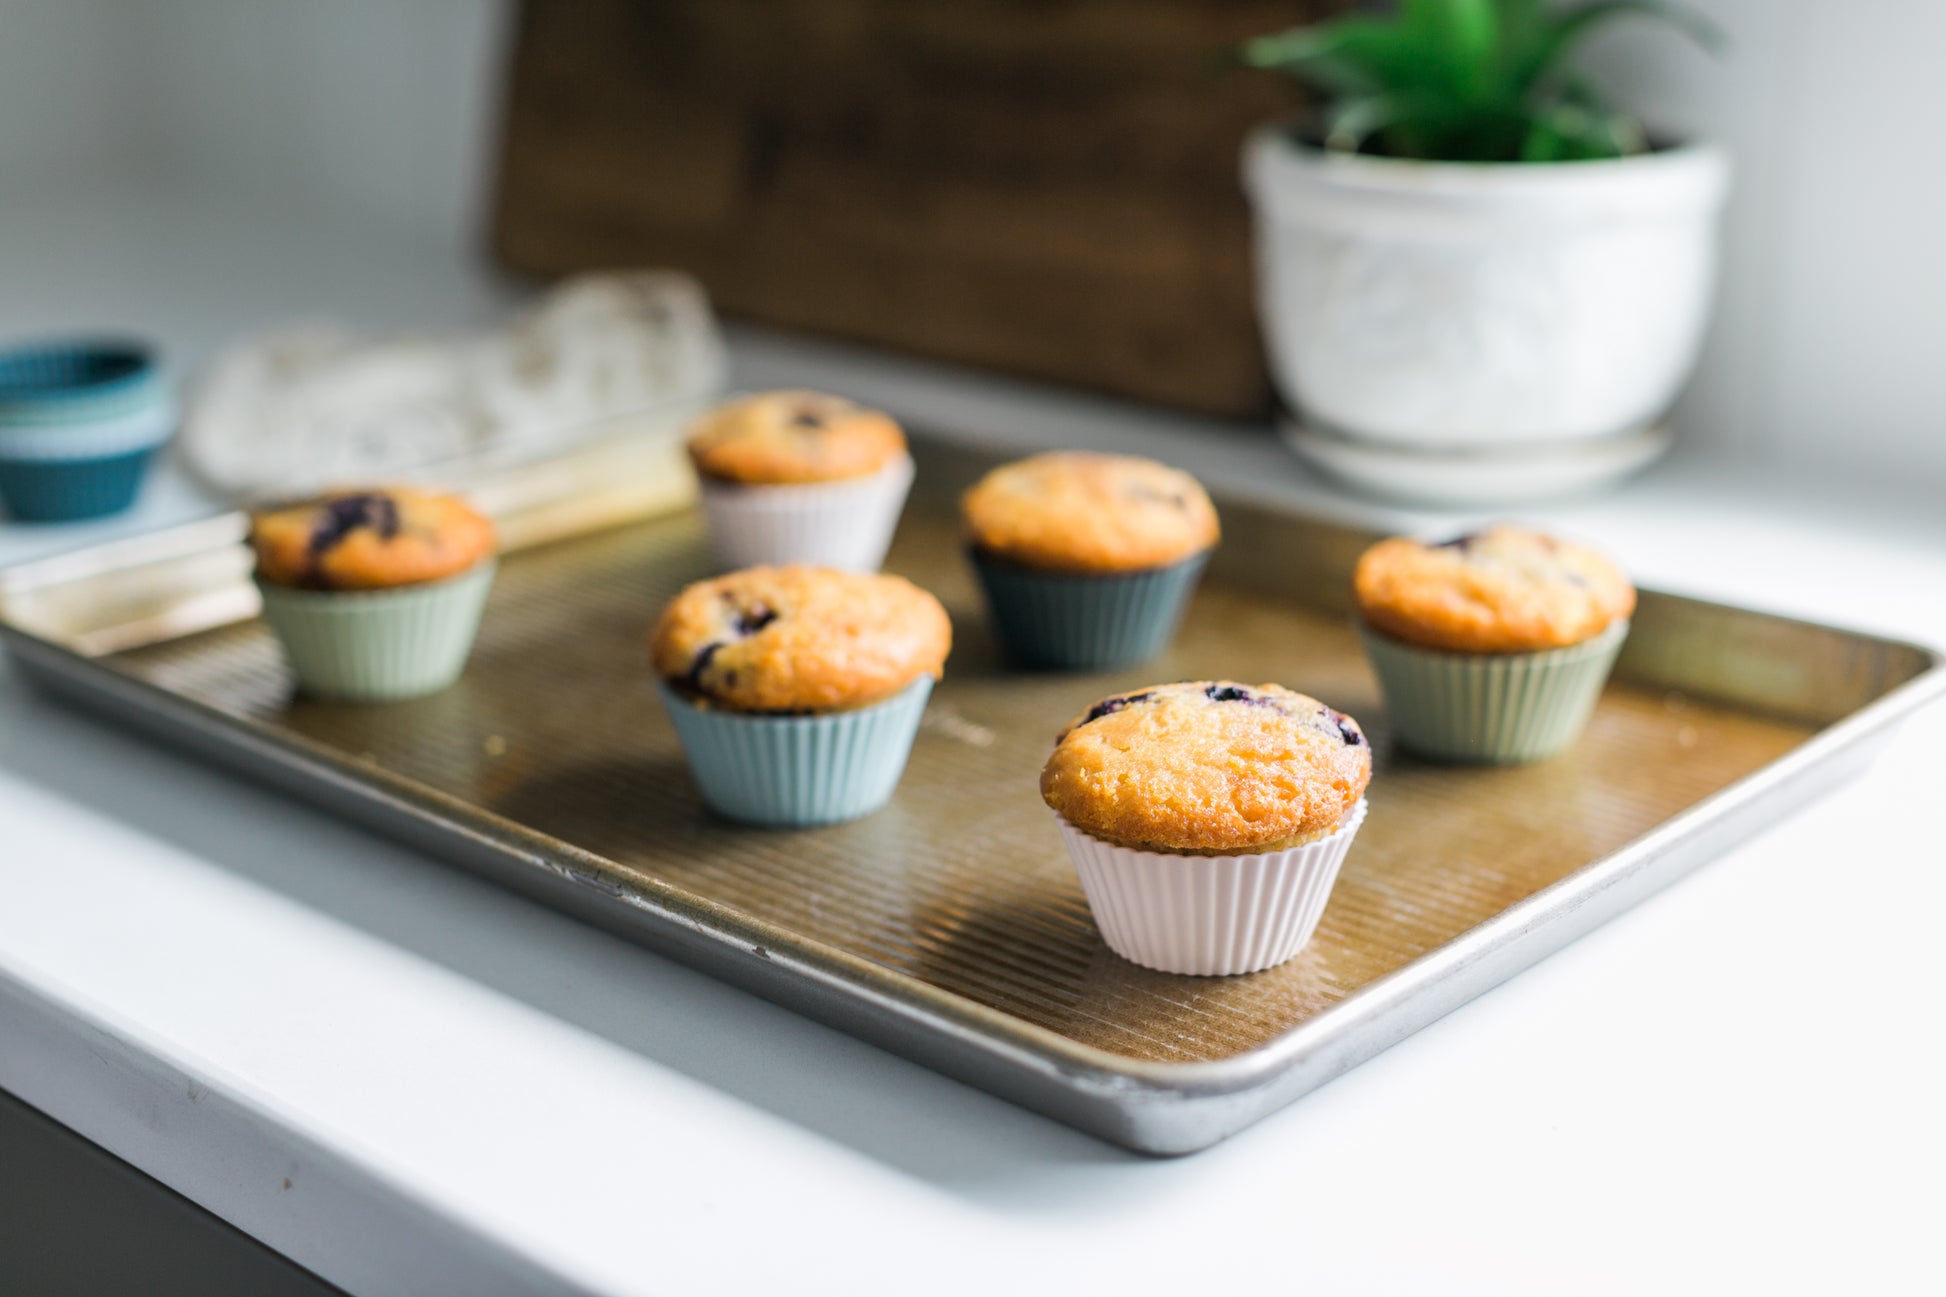 Silicone Muffin Pan, European Silicone Cupcake Baking Pan, 6 Cup